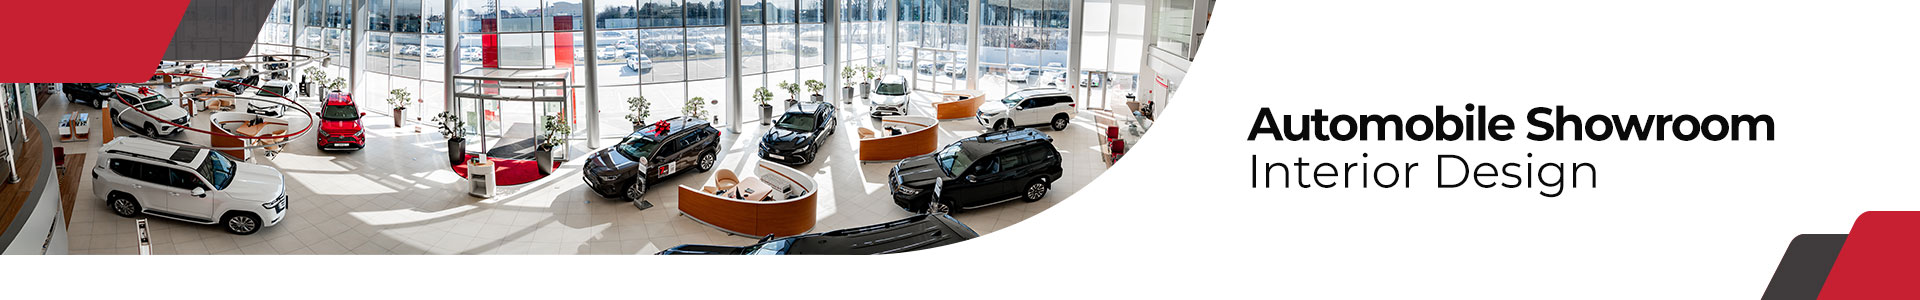 Automobile Showroom Interior Design Service